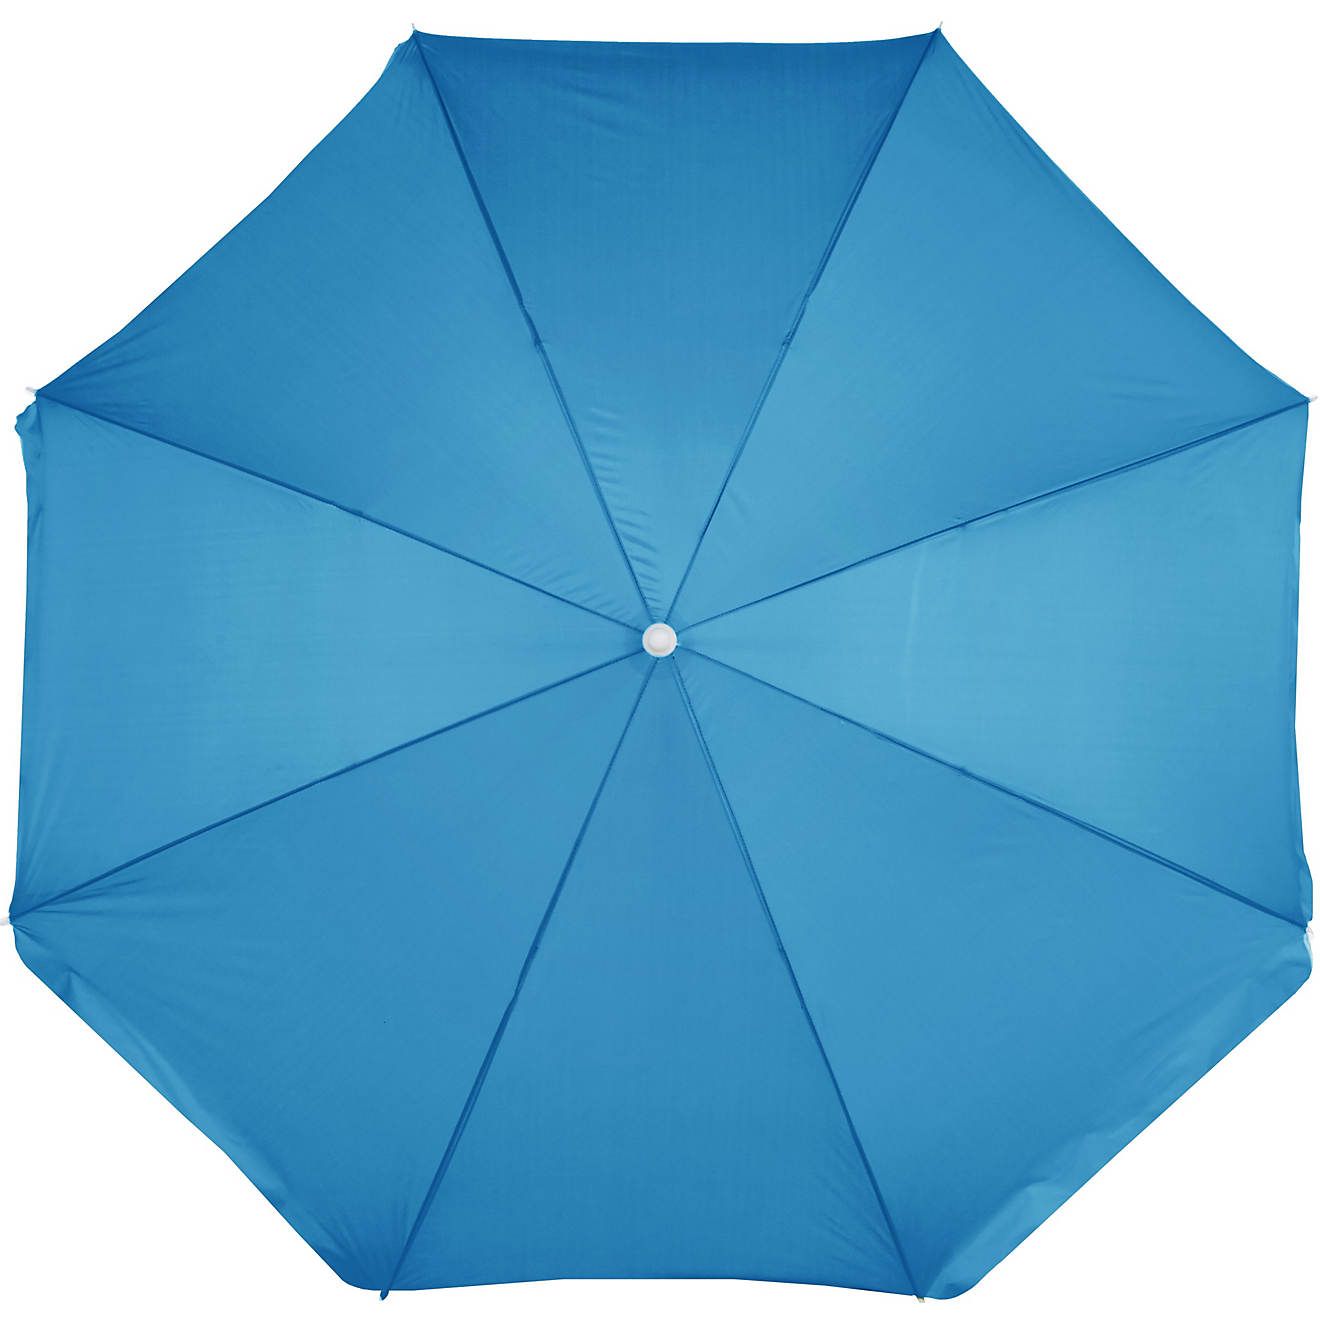 O'Rageous 6 ft Beach Umbrella | Academy Sports + Outdoor Affiliate